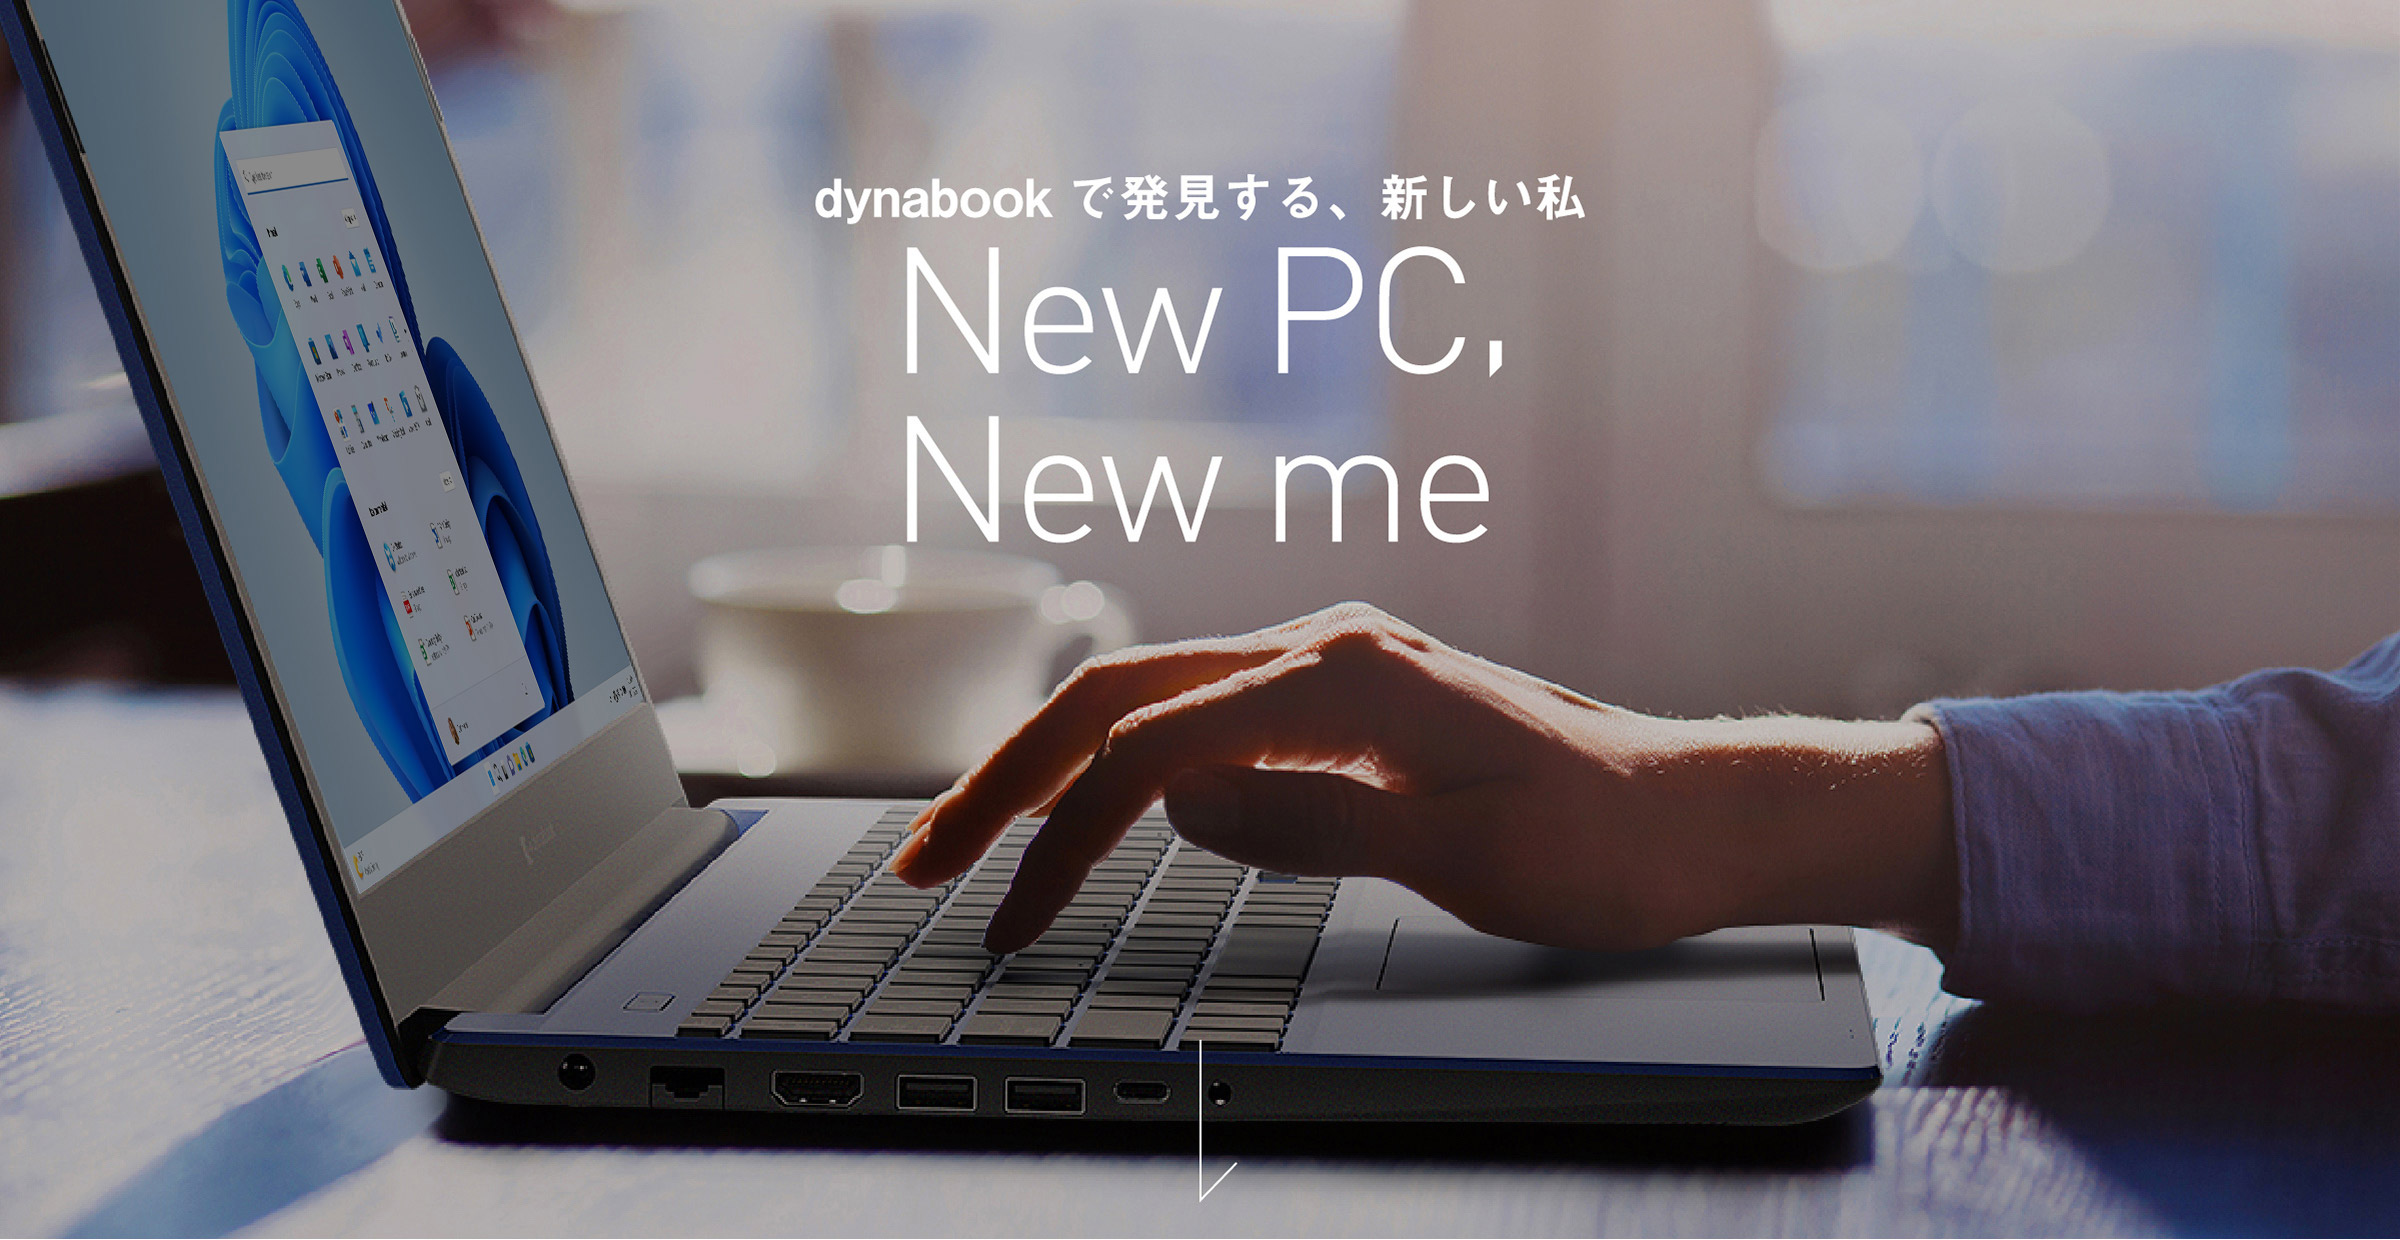 dynabookで発見する、新しい私 New PC, New me